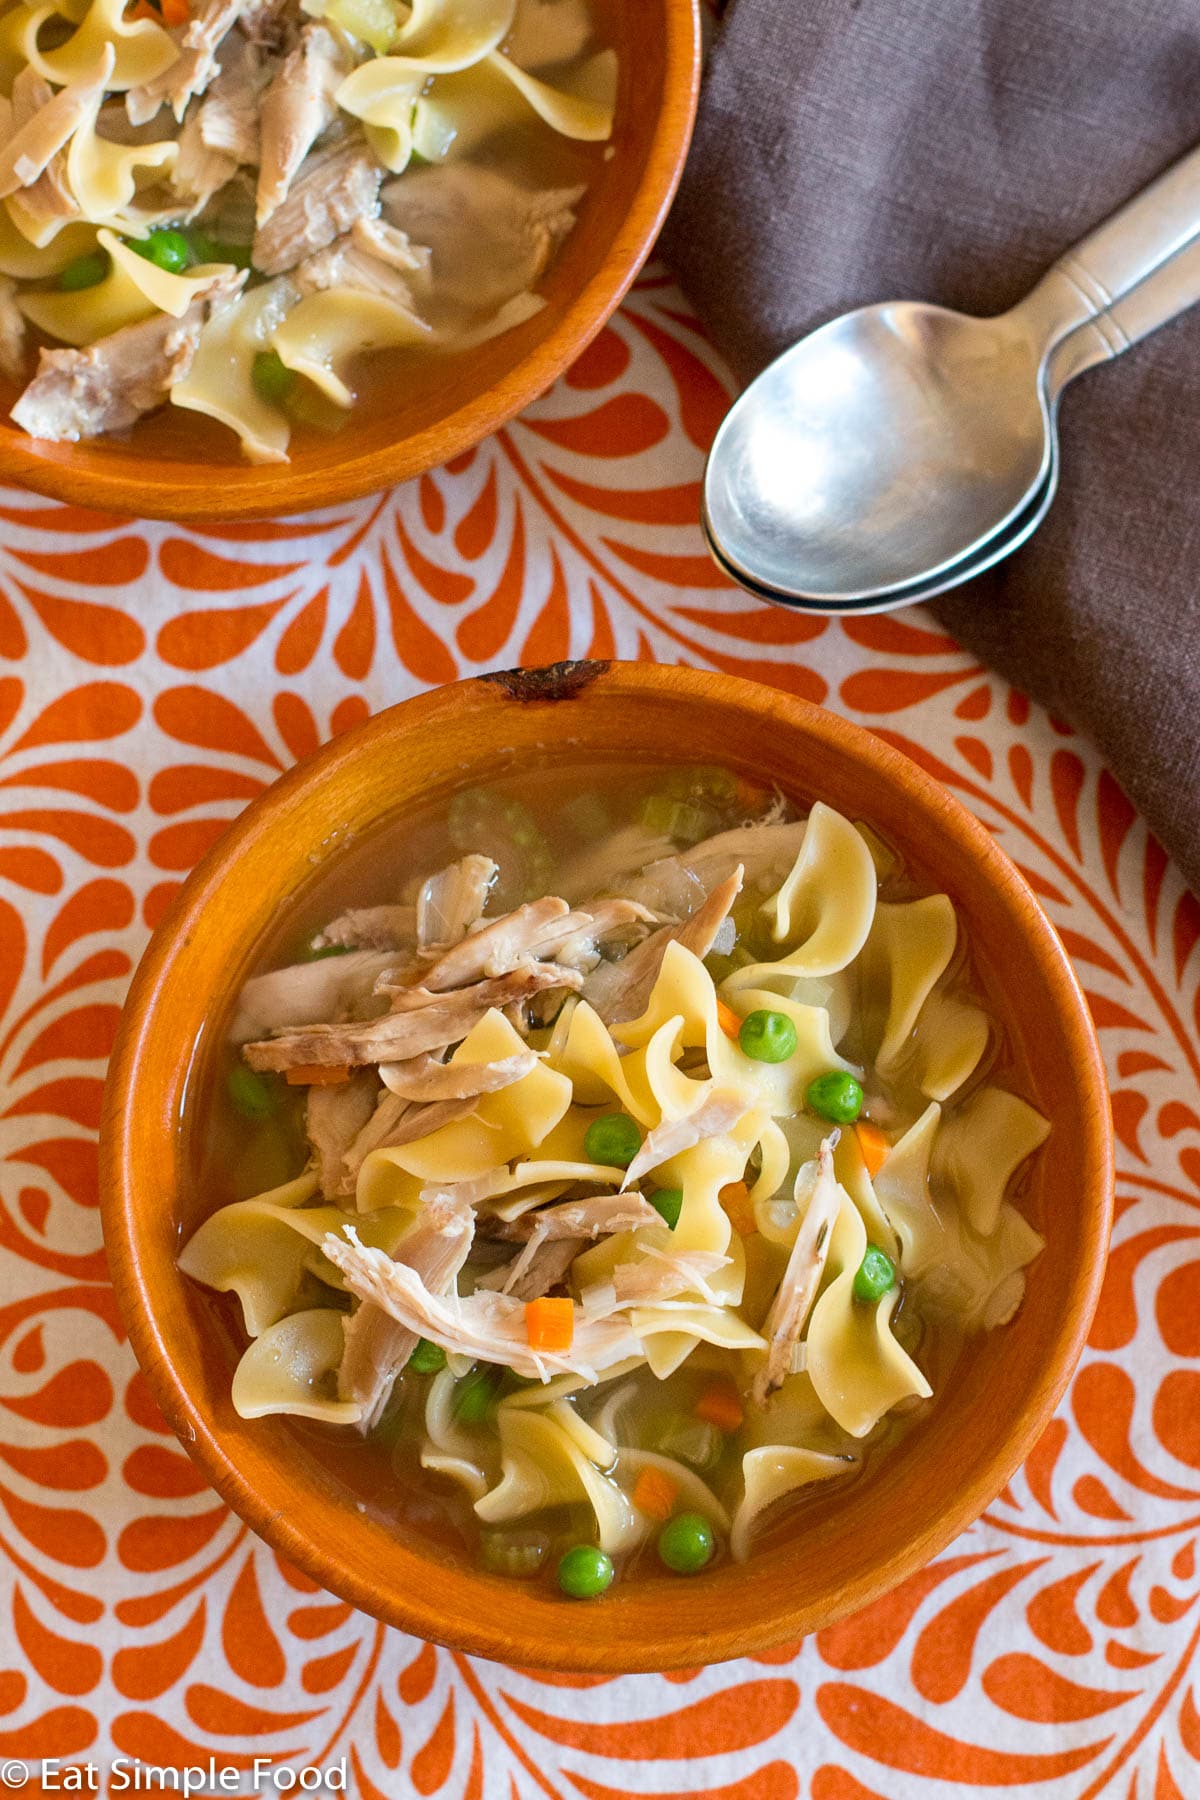 https://eatsimplefood.com/wp-content/uploads/2020/04/Chicken-Noodle-Soup-Top-EatSimpleFood.com_.jpg